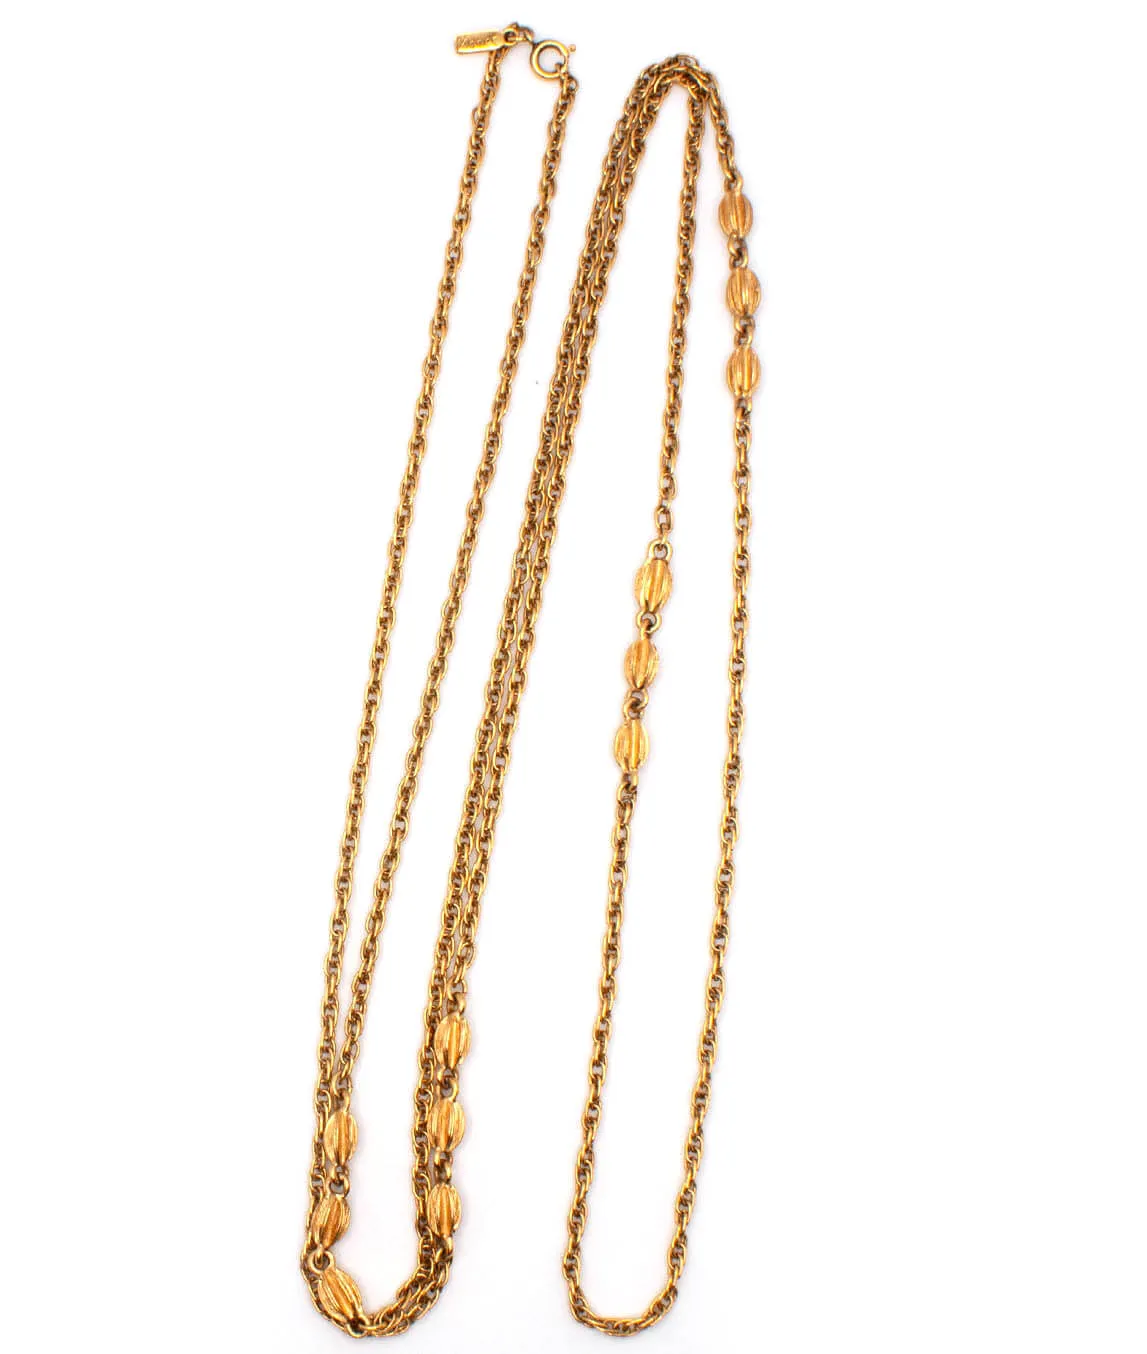 Vintage Monet opera length golden chain necklace